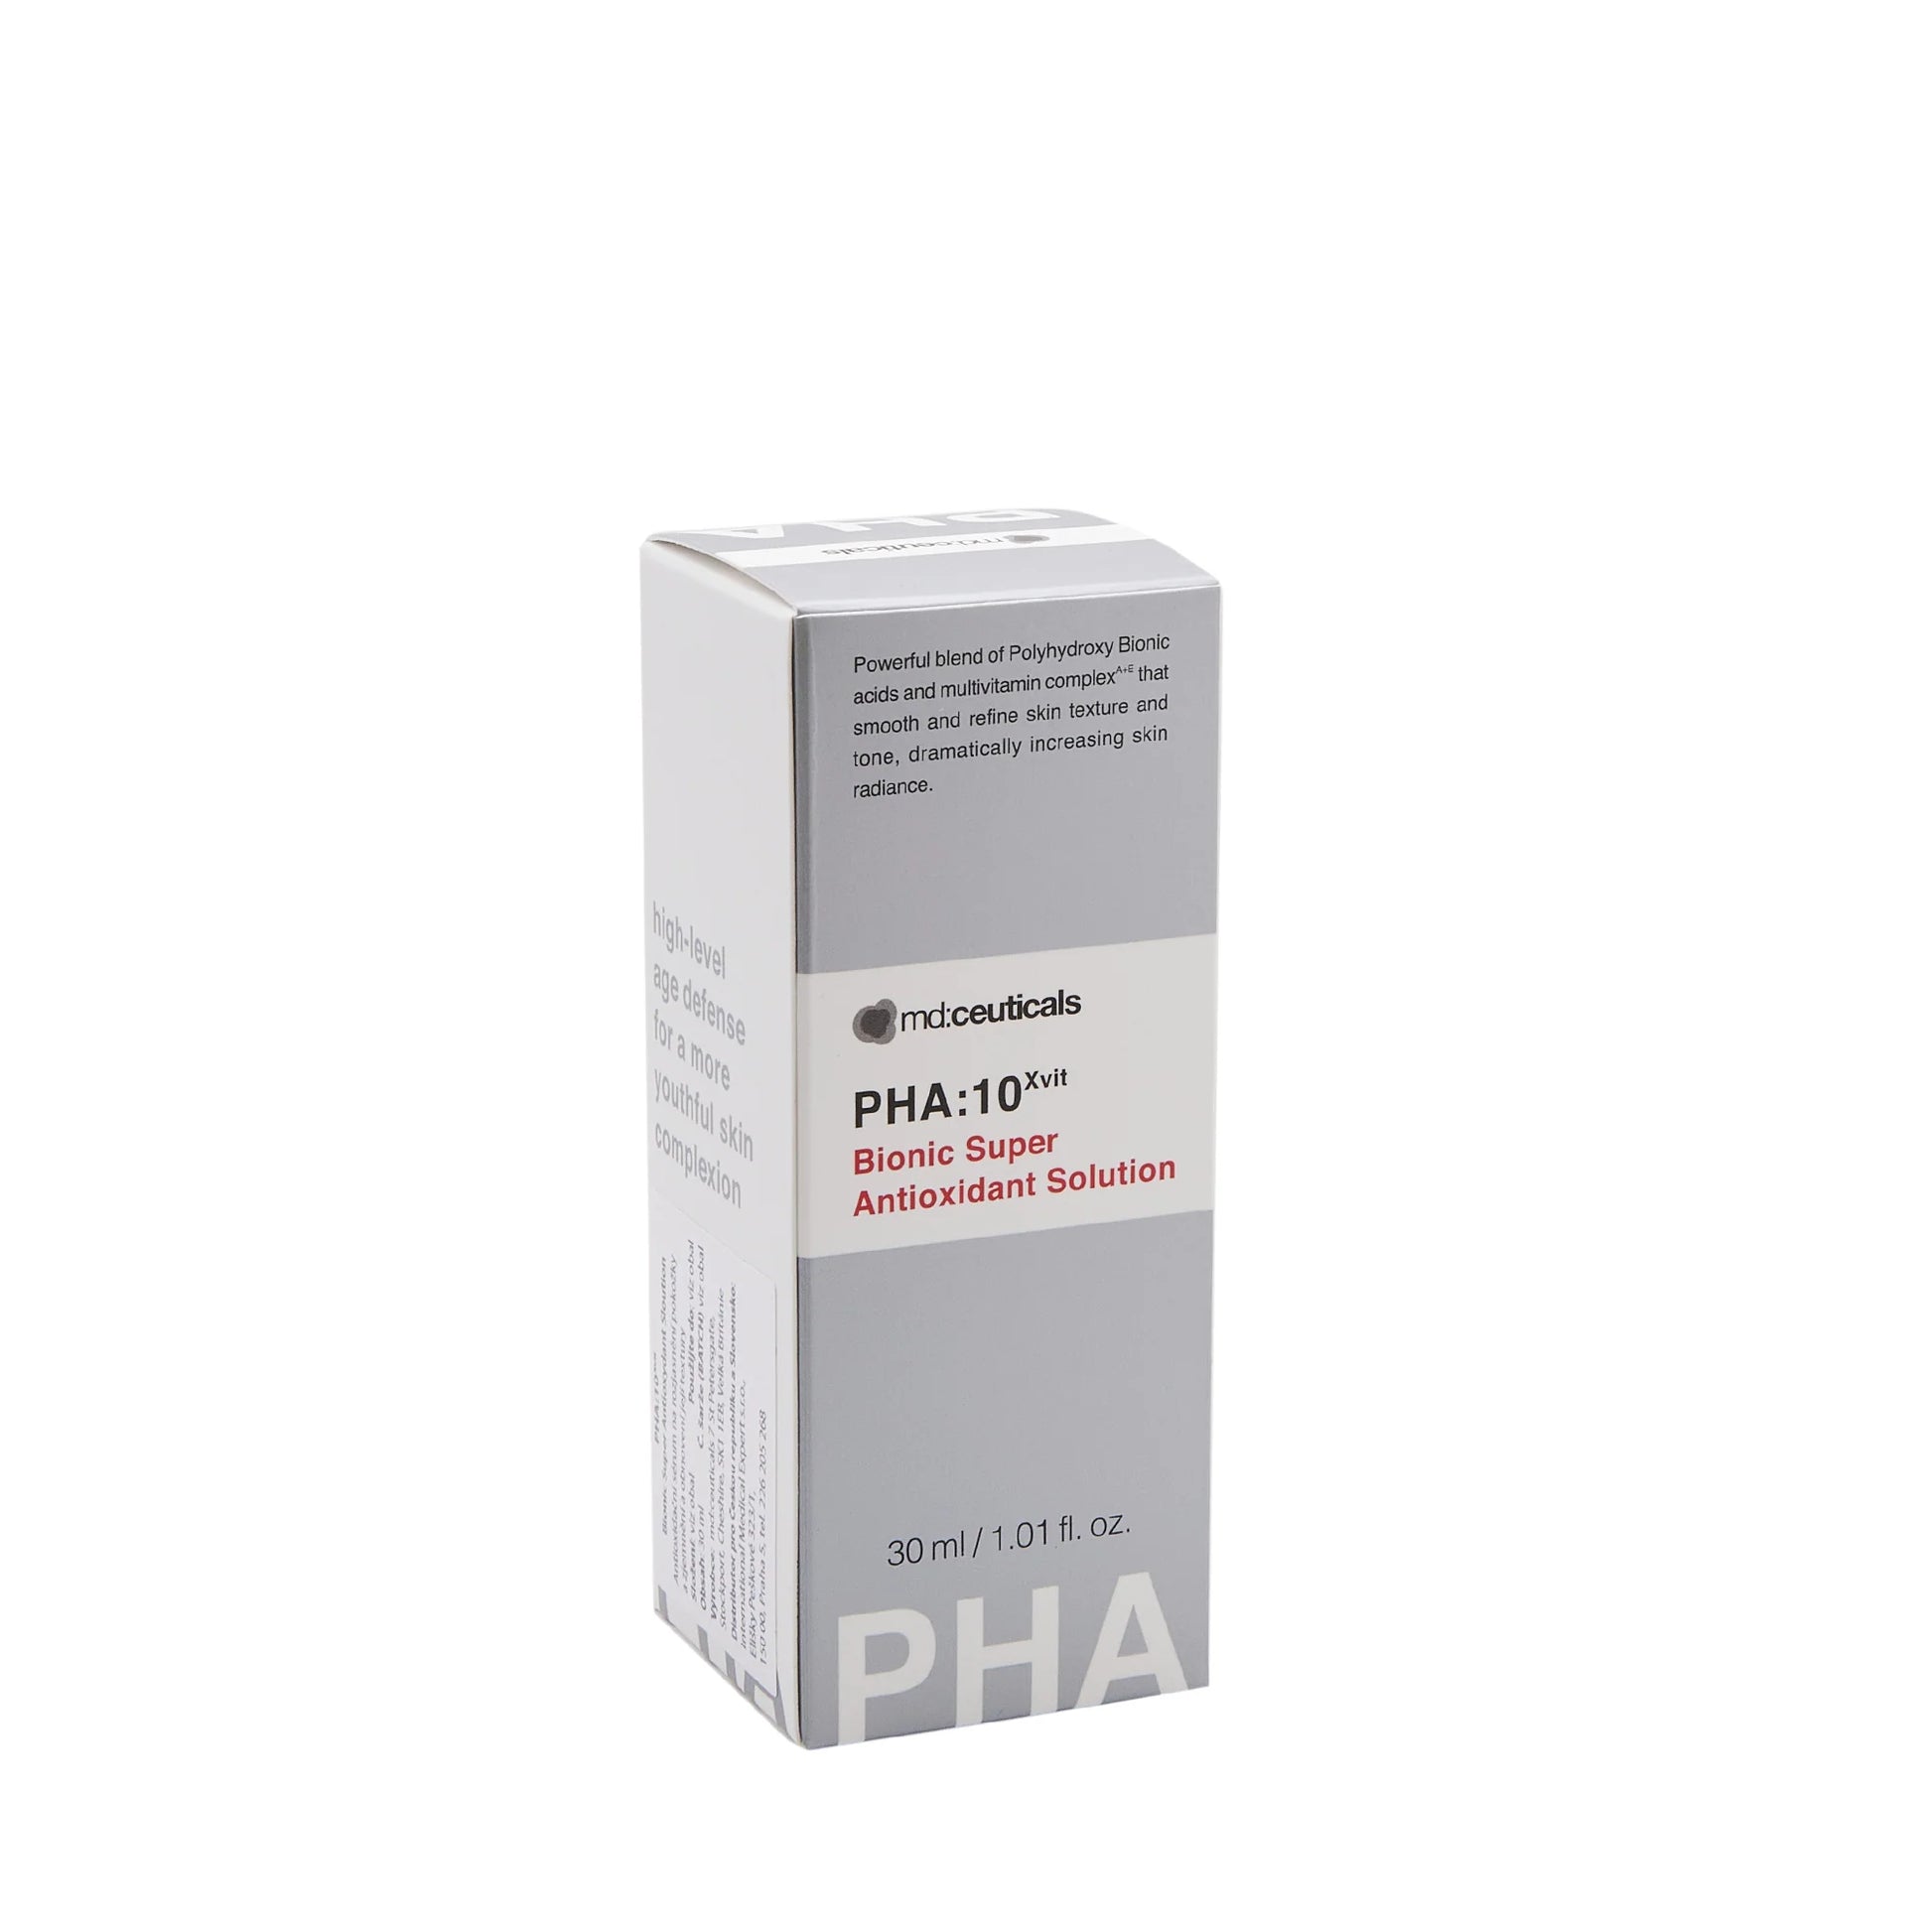 md:ceuticals PHA:10Xvit Super Antioxidant Solution 特效抗氧滋潤精華30ml - 5SKINLAB